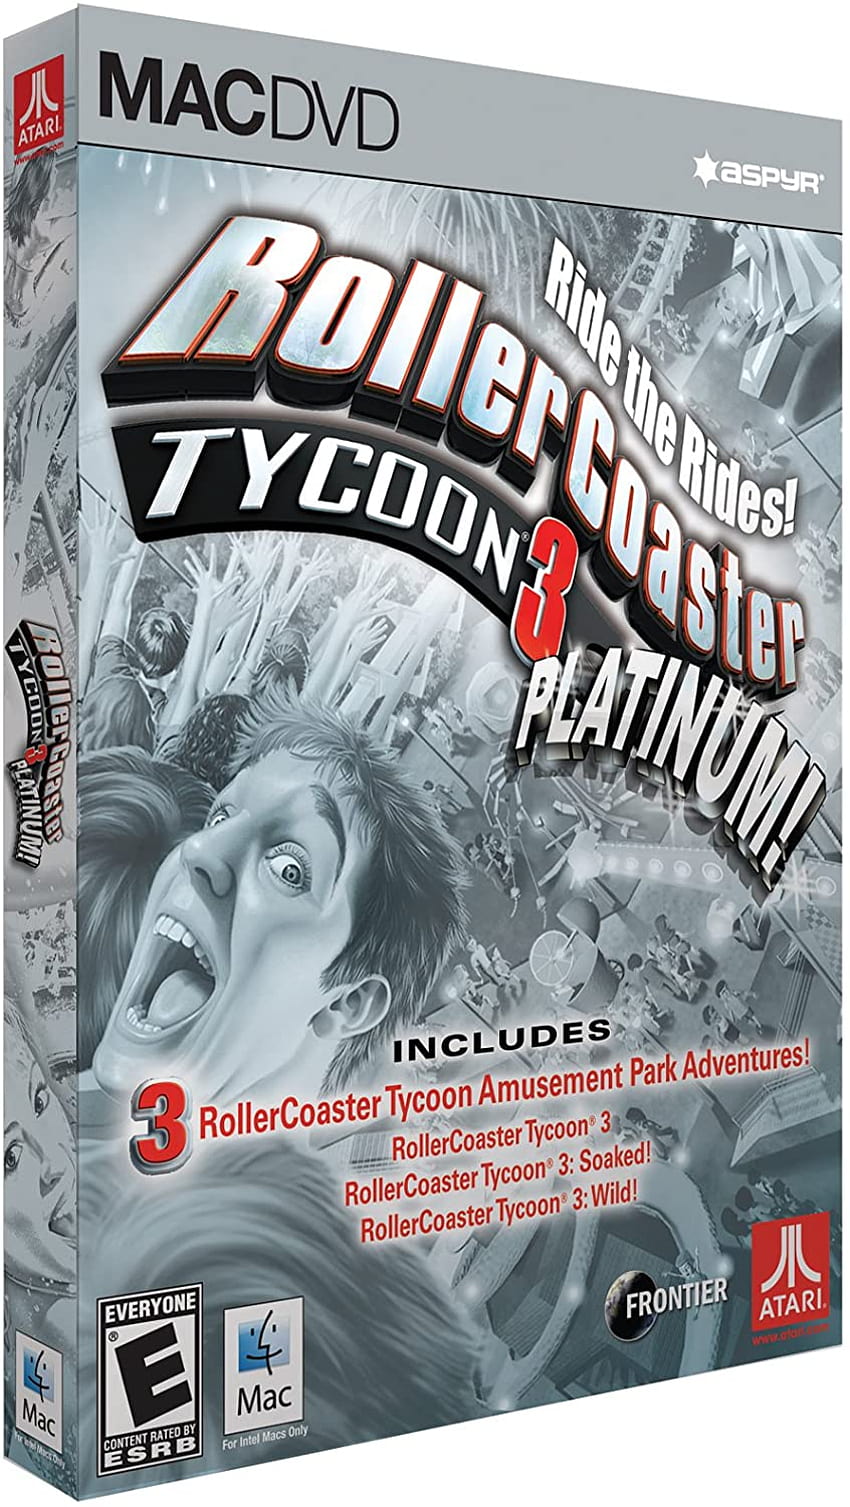 RollerCoaster Tycoon 3 Platinum: Mac: Game Komputer dan Video wallpaper ponsel HD